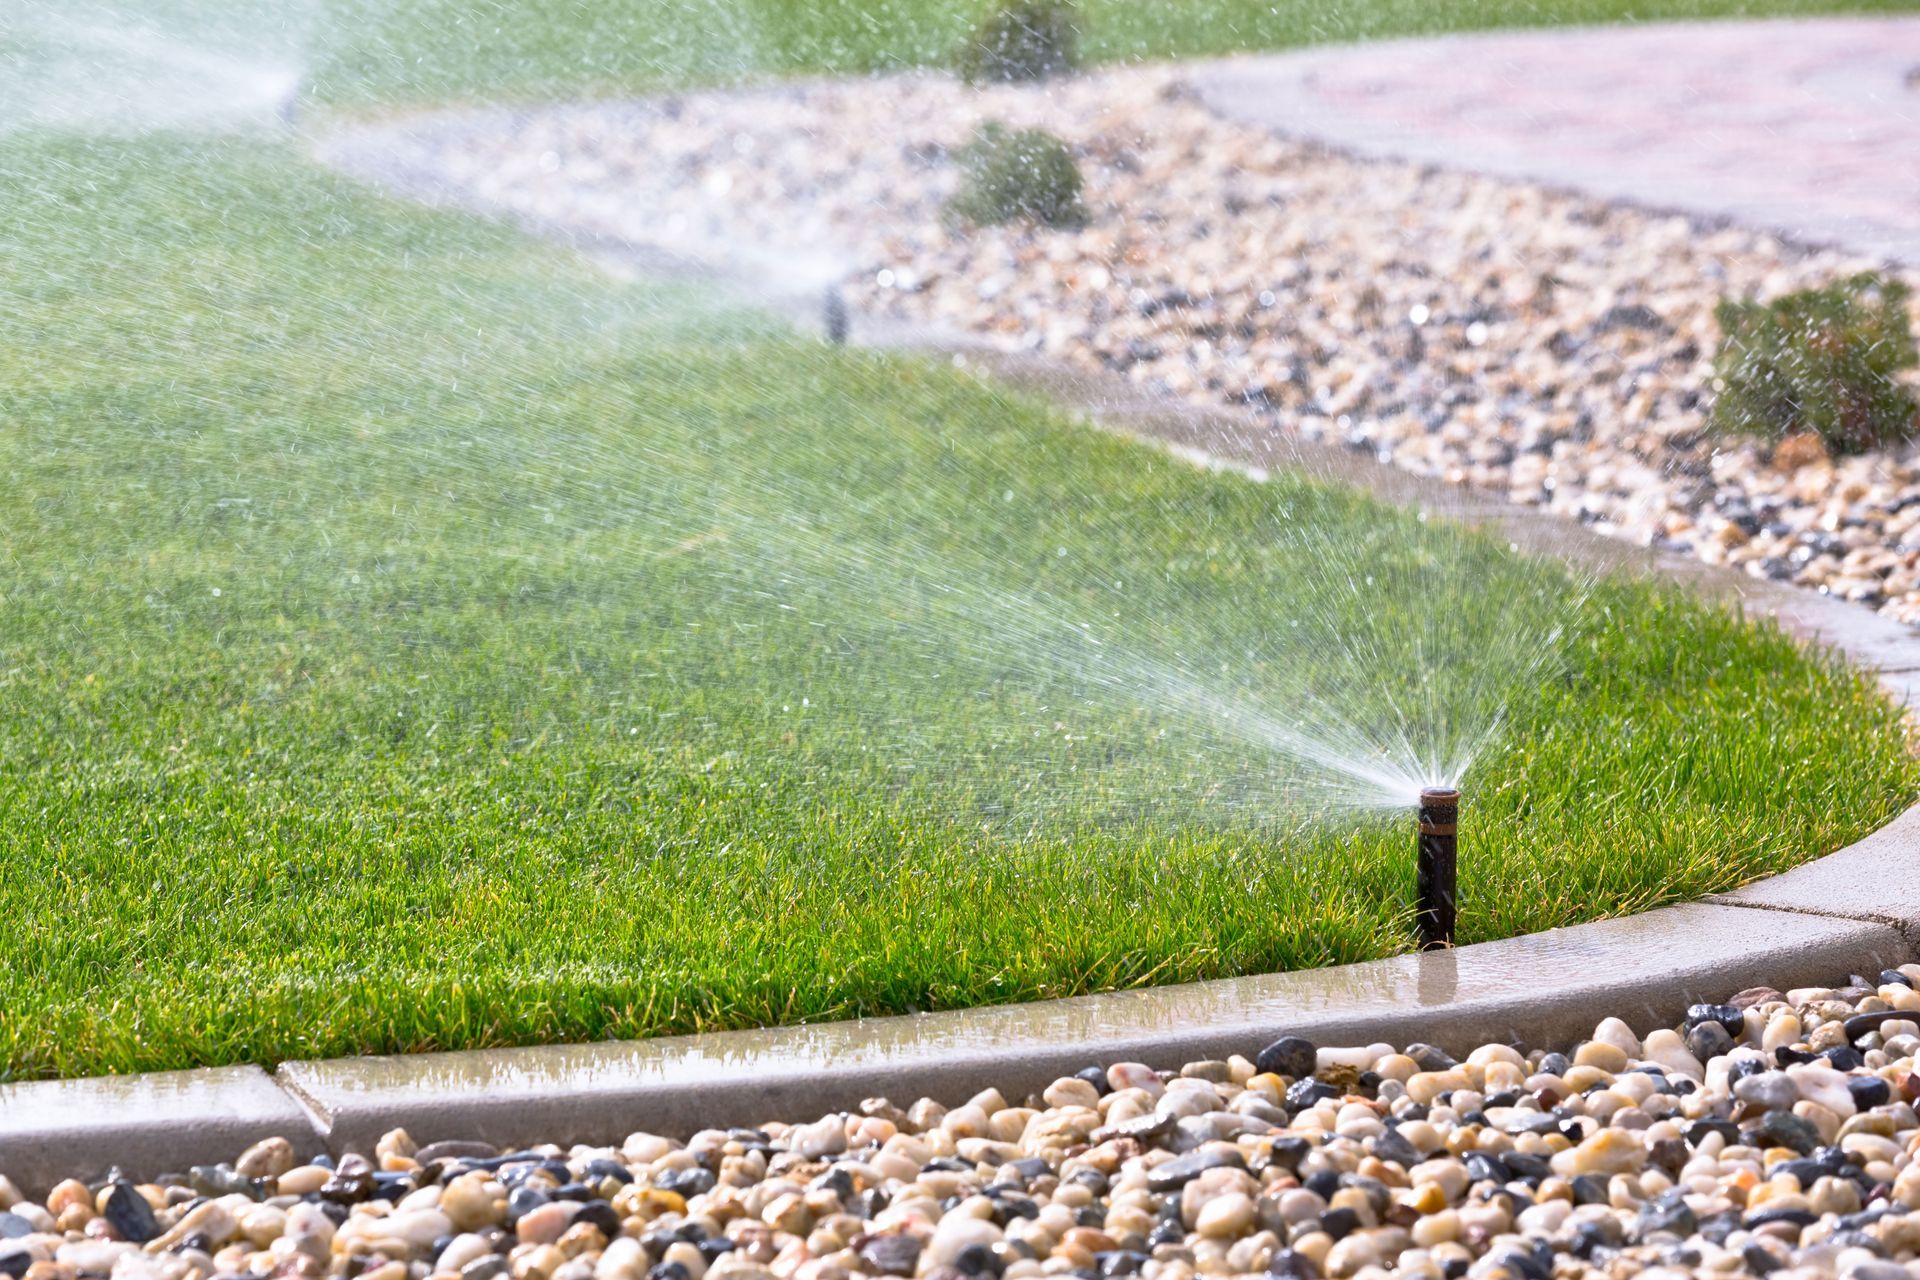 Professional Sprinkler Irrigation Service in North Haven & Hamden, CT